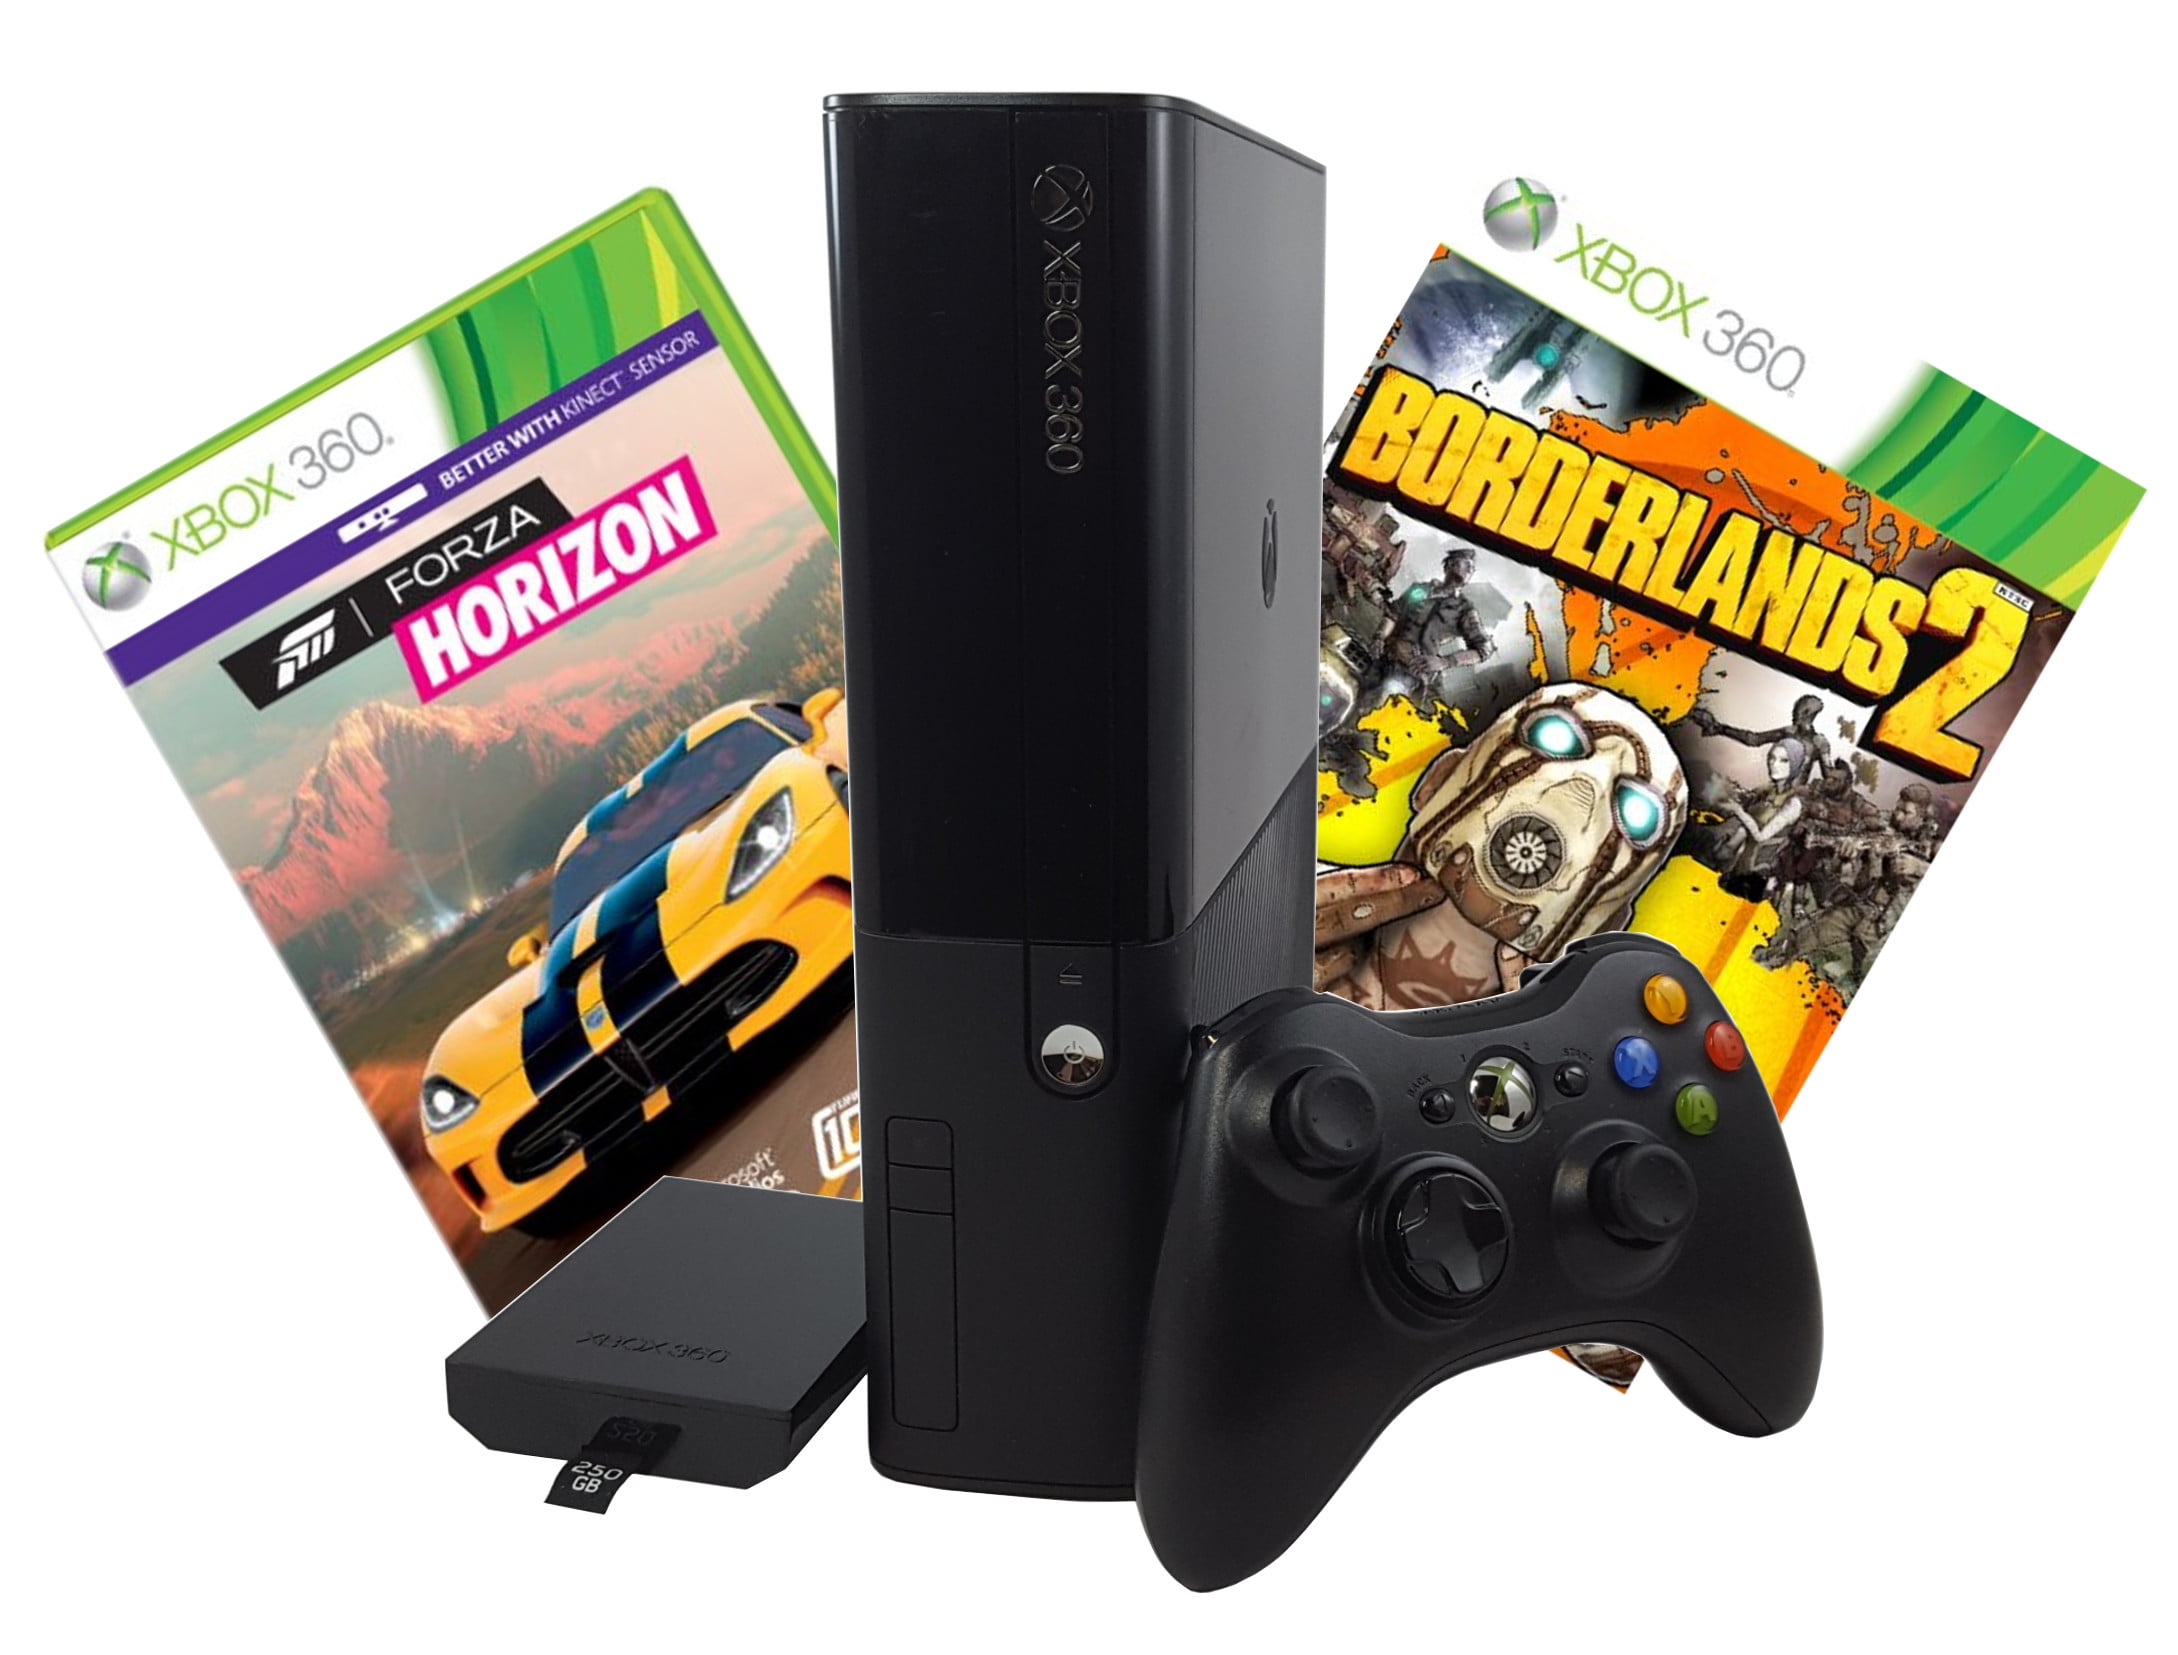  Forza Horizon - Xbox 360 : Microsoft Corporation